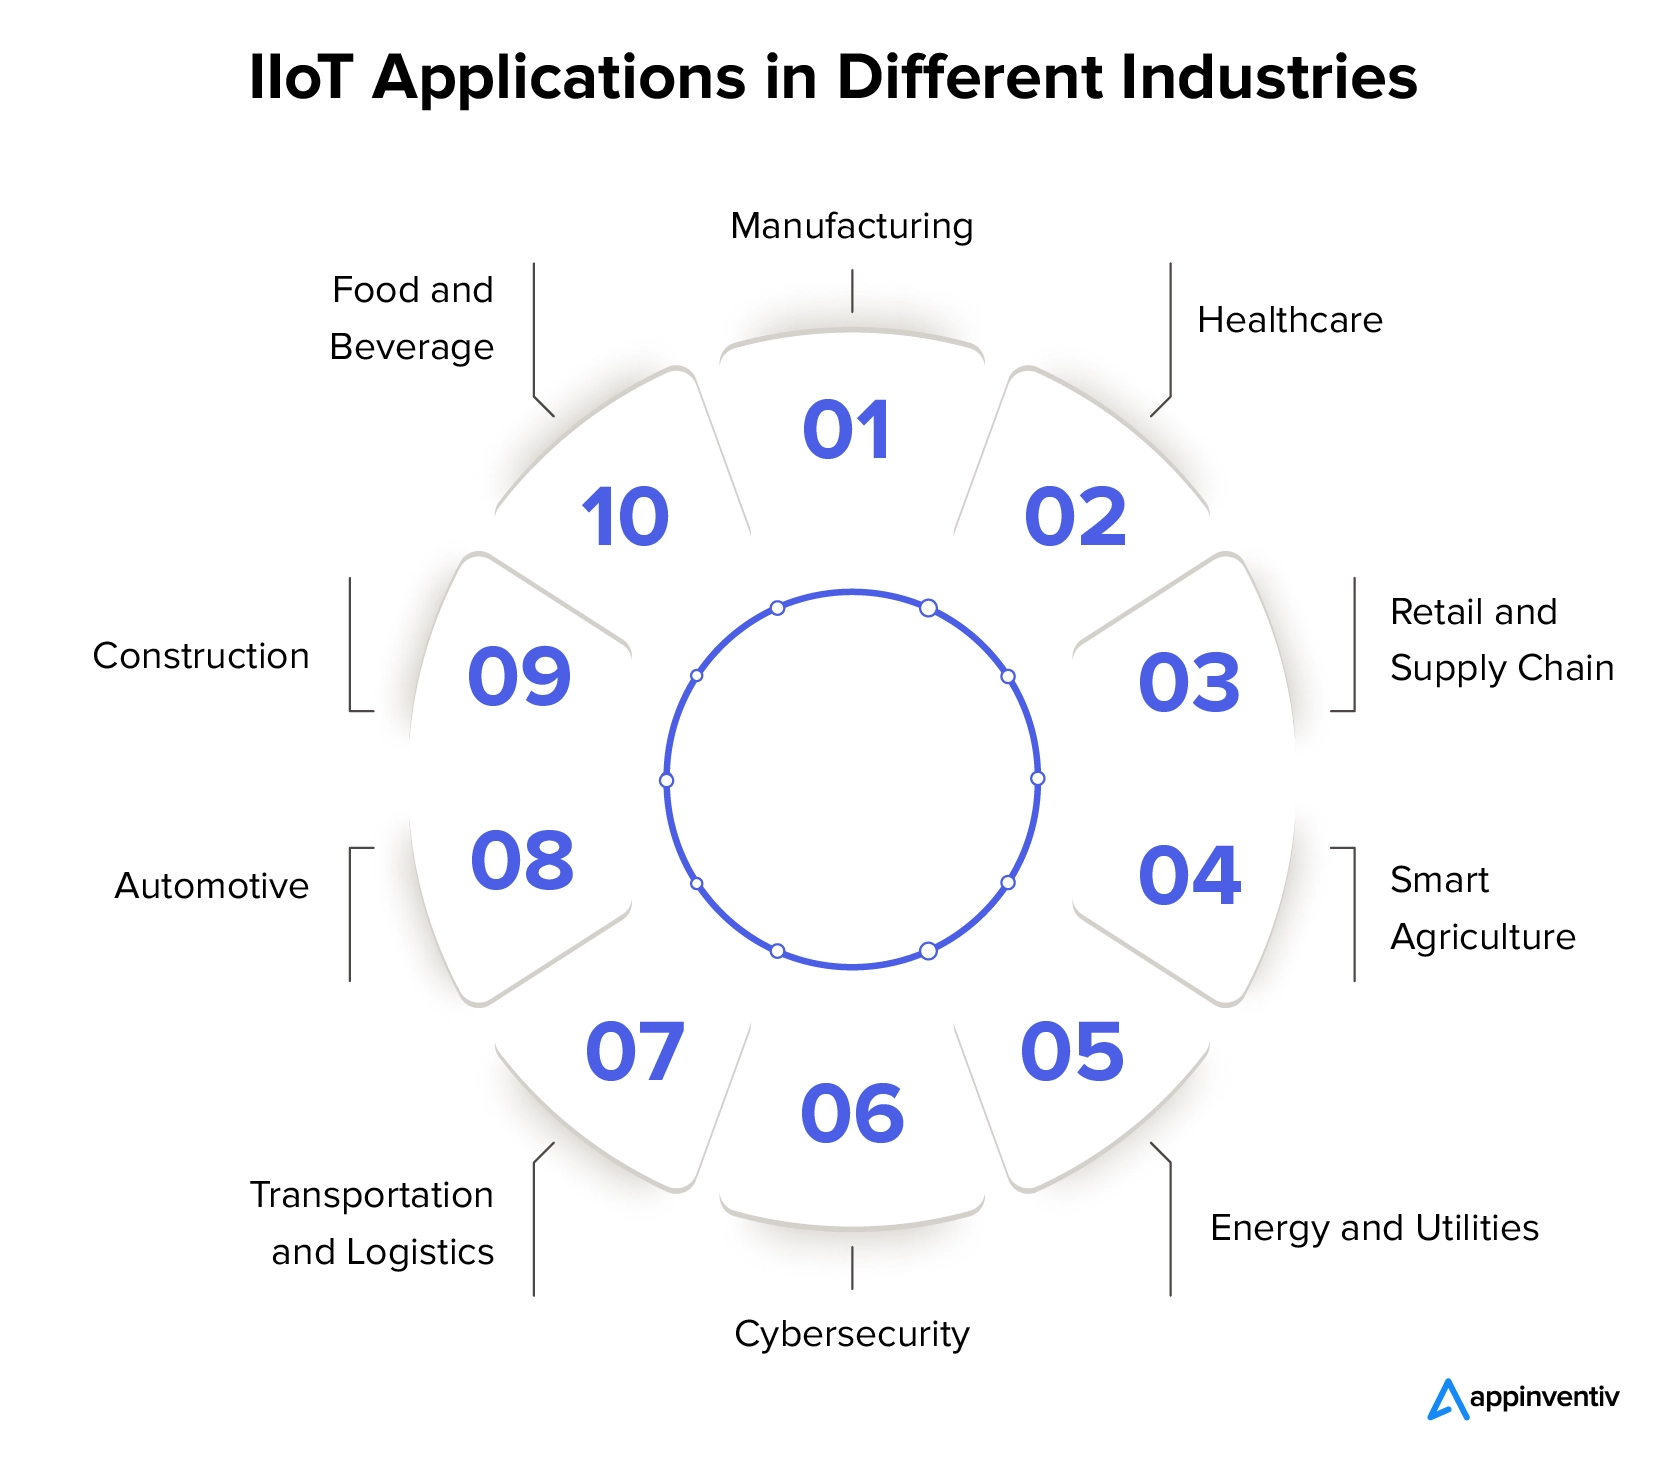 IIoT Applications in Different Industries